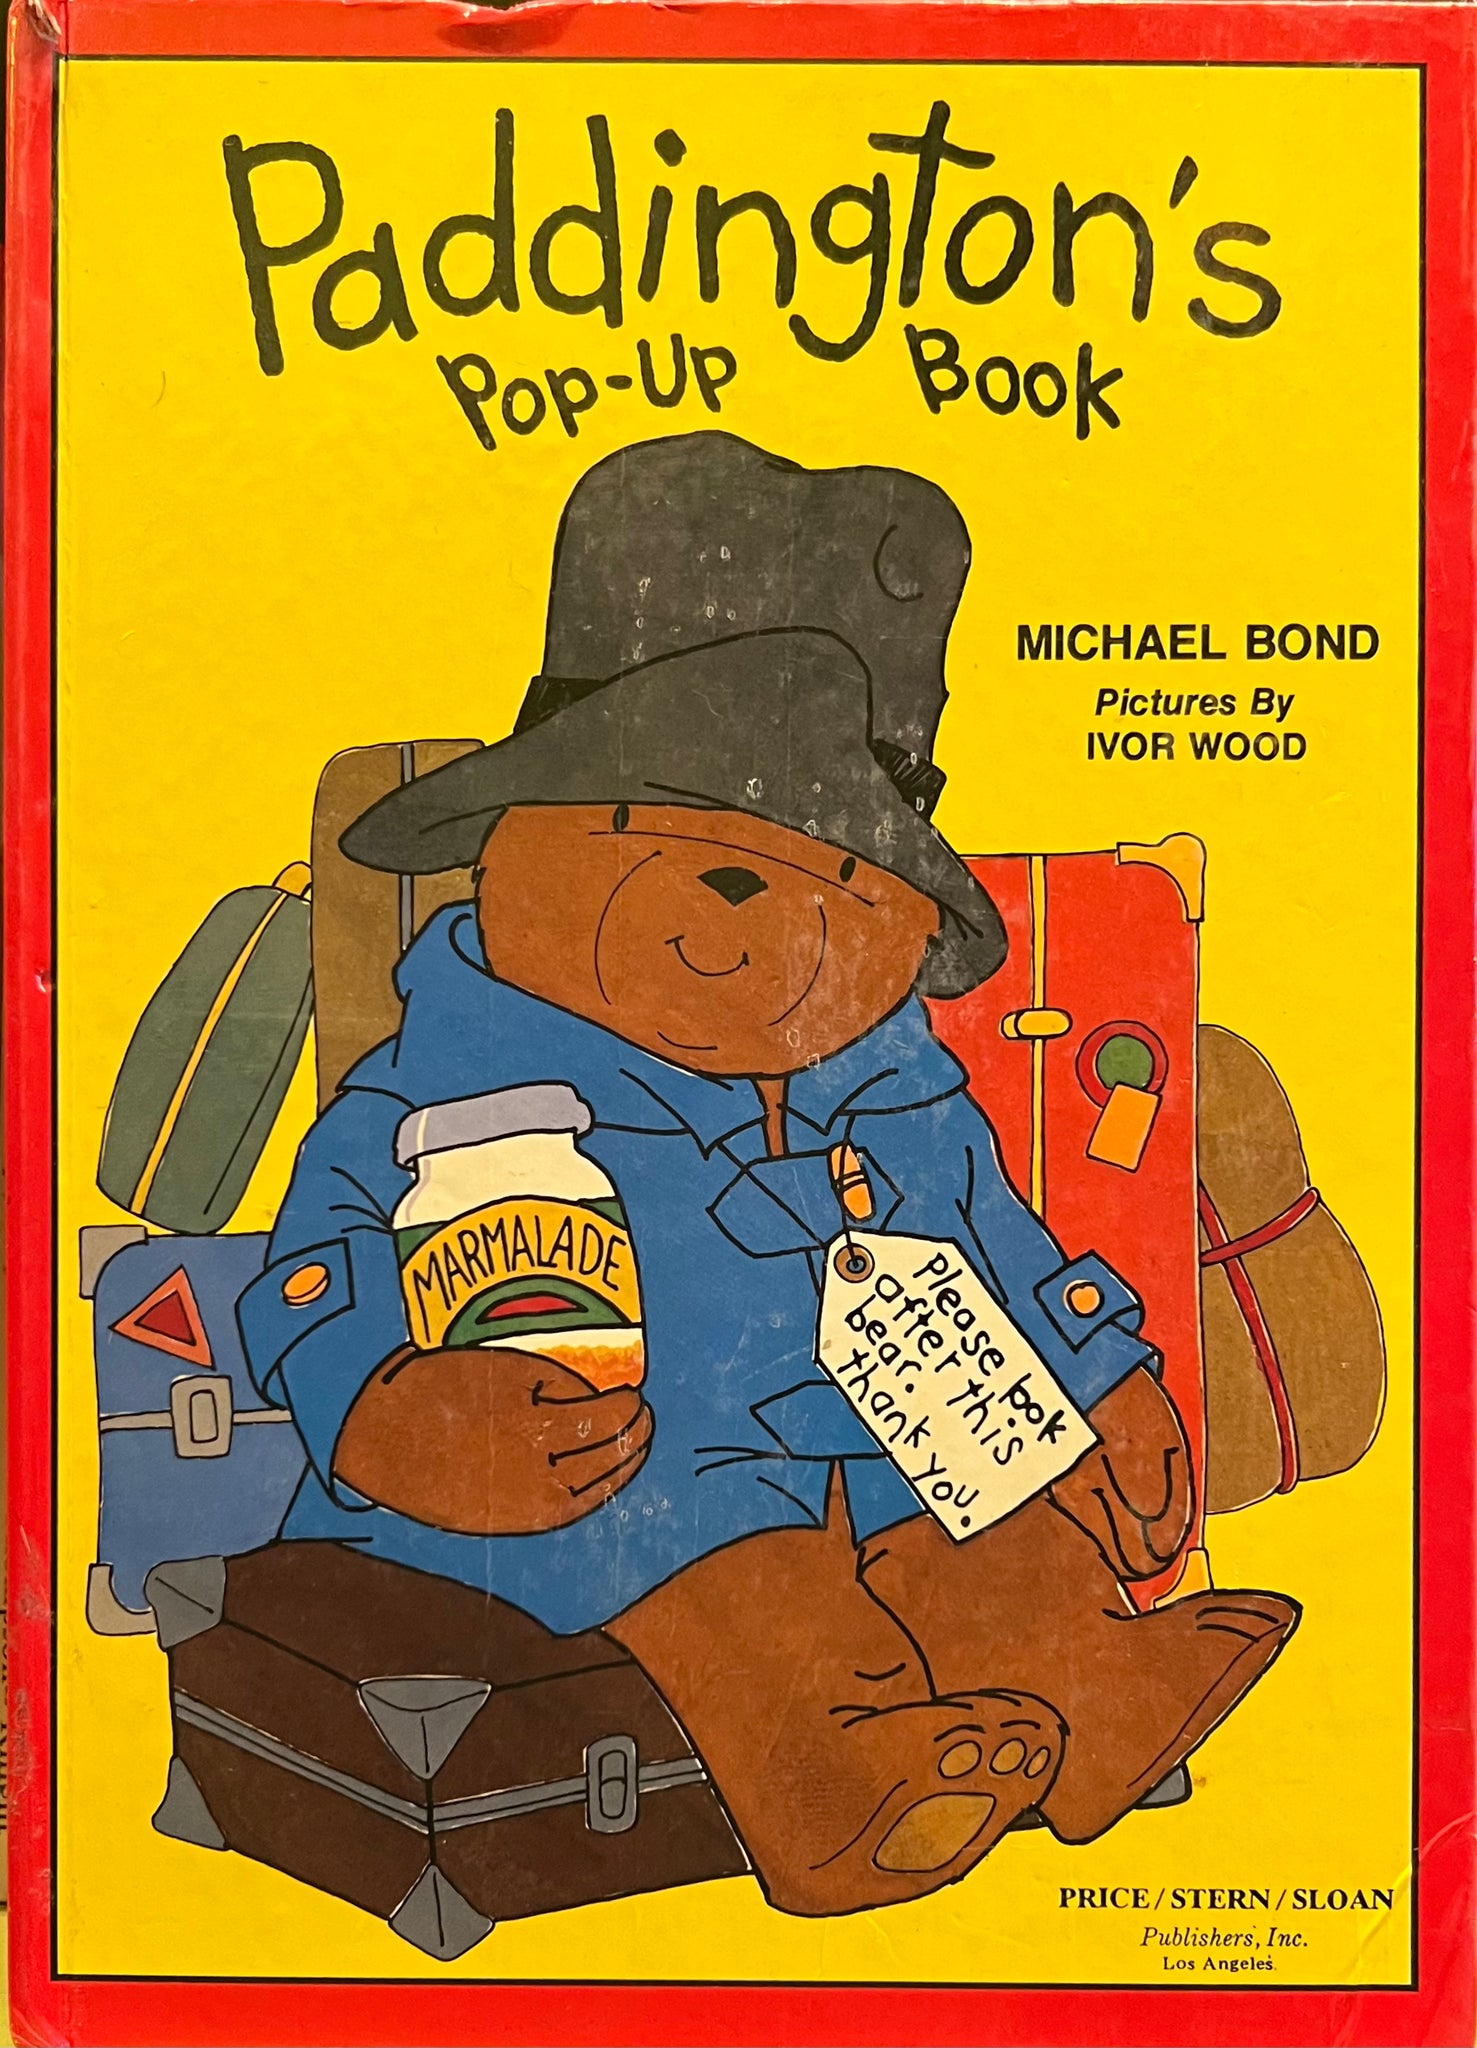 Paddington’s Pop-Up Book, Michael Bond